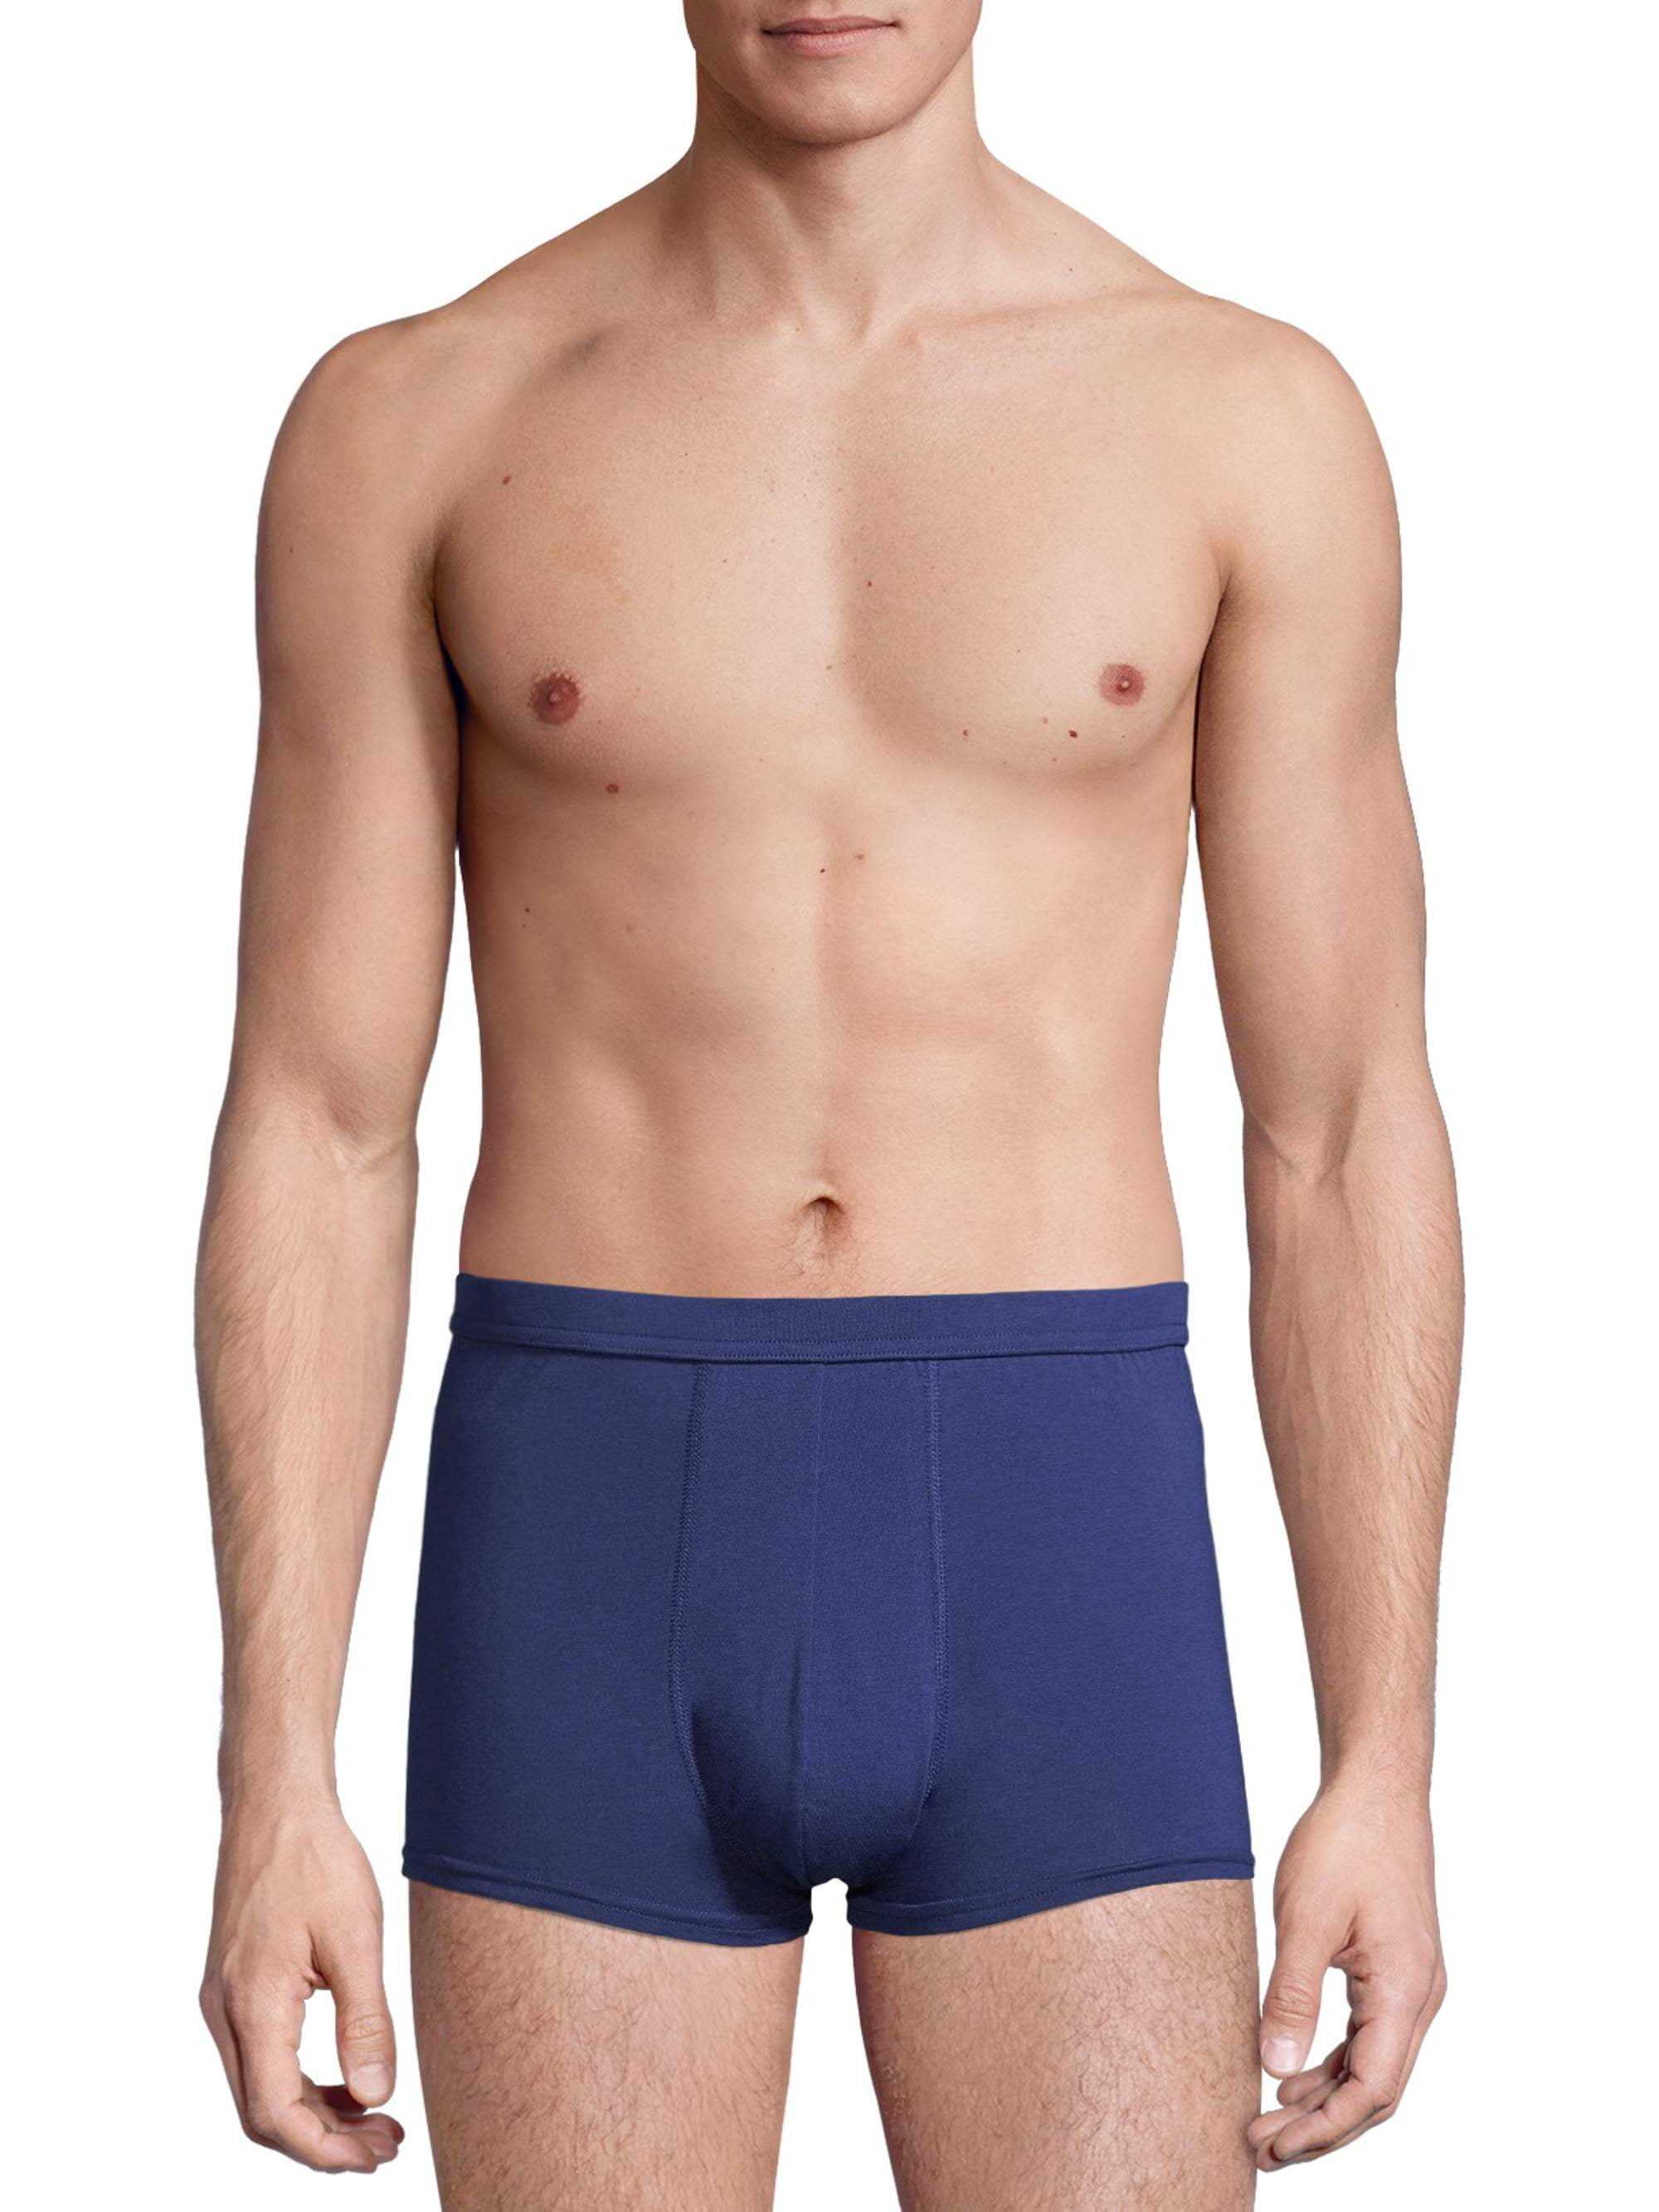 Hanes Men's Comfort Flex Fit Ultra Soft Cotton Stretch Trunks, 3 Pack